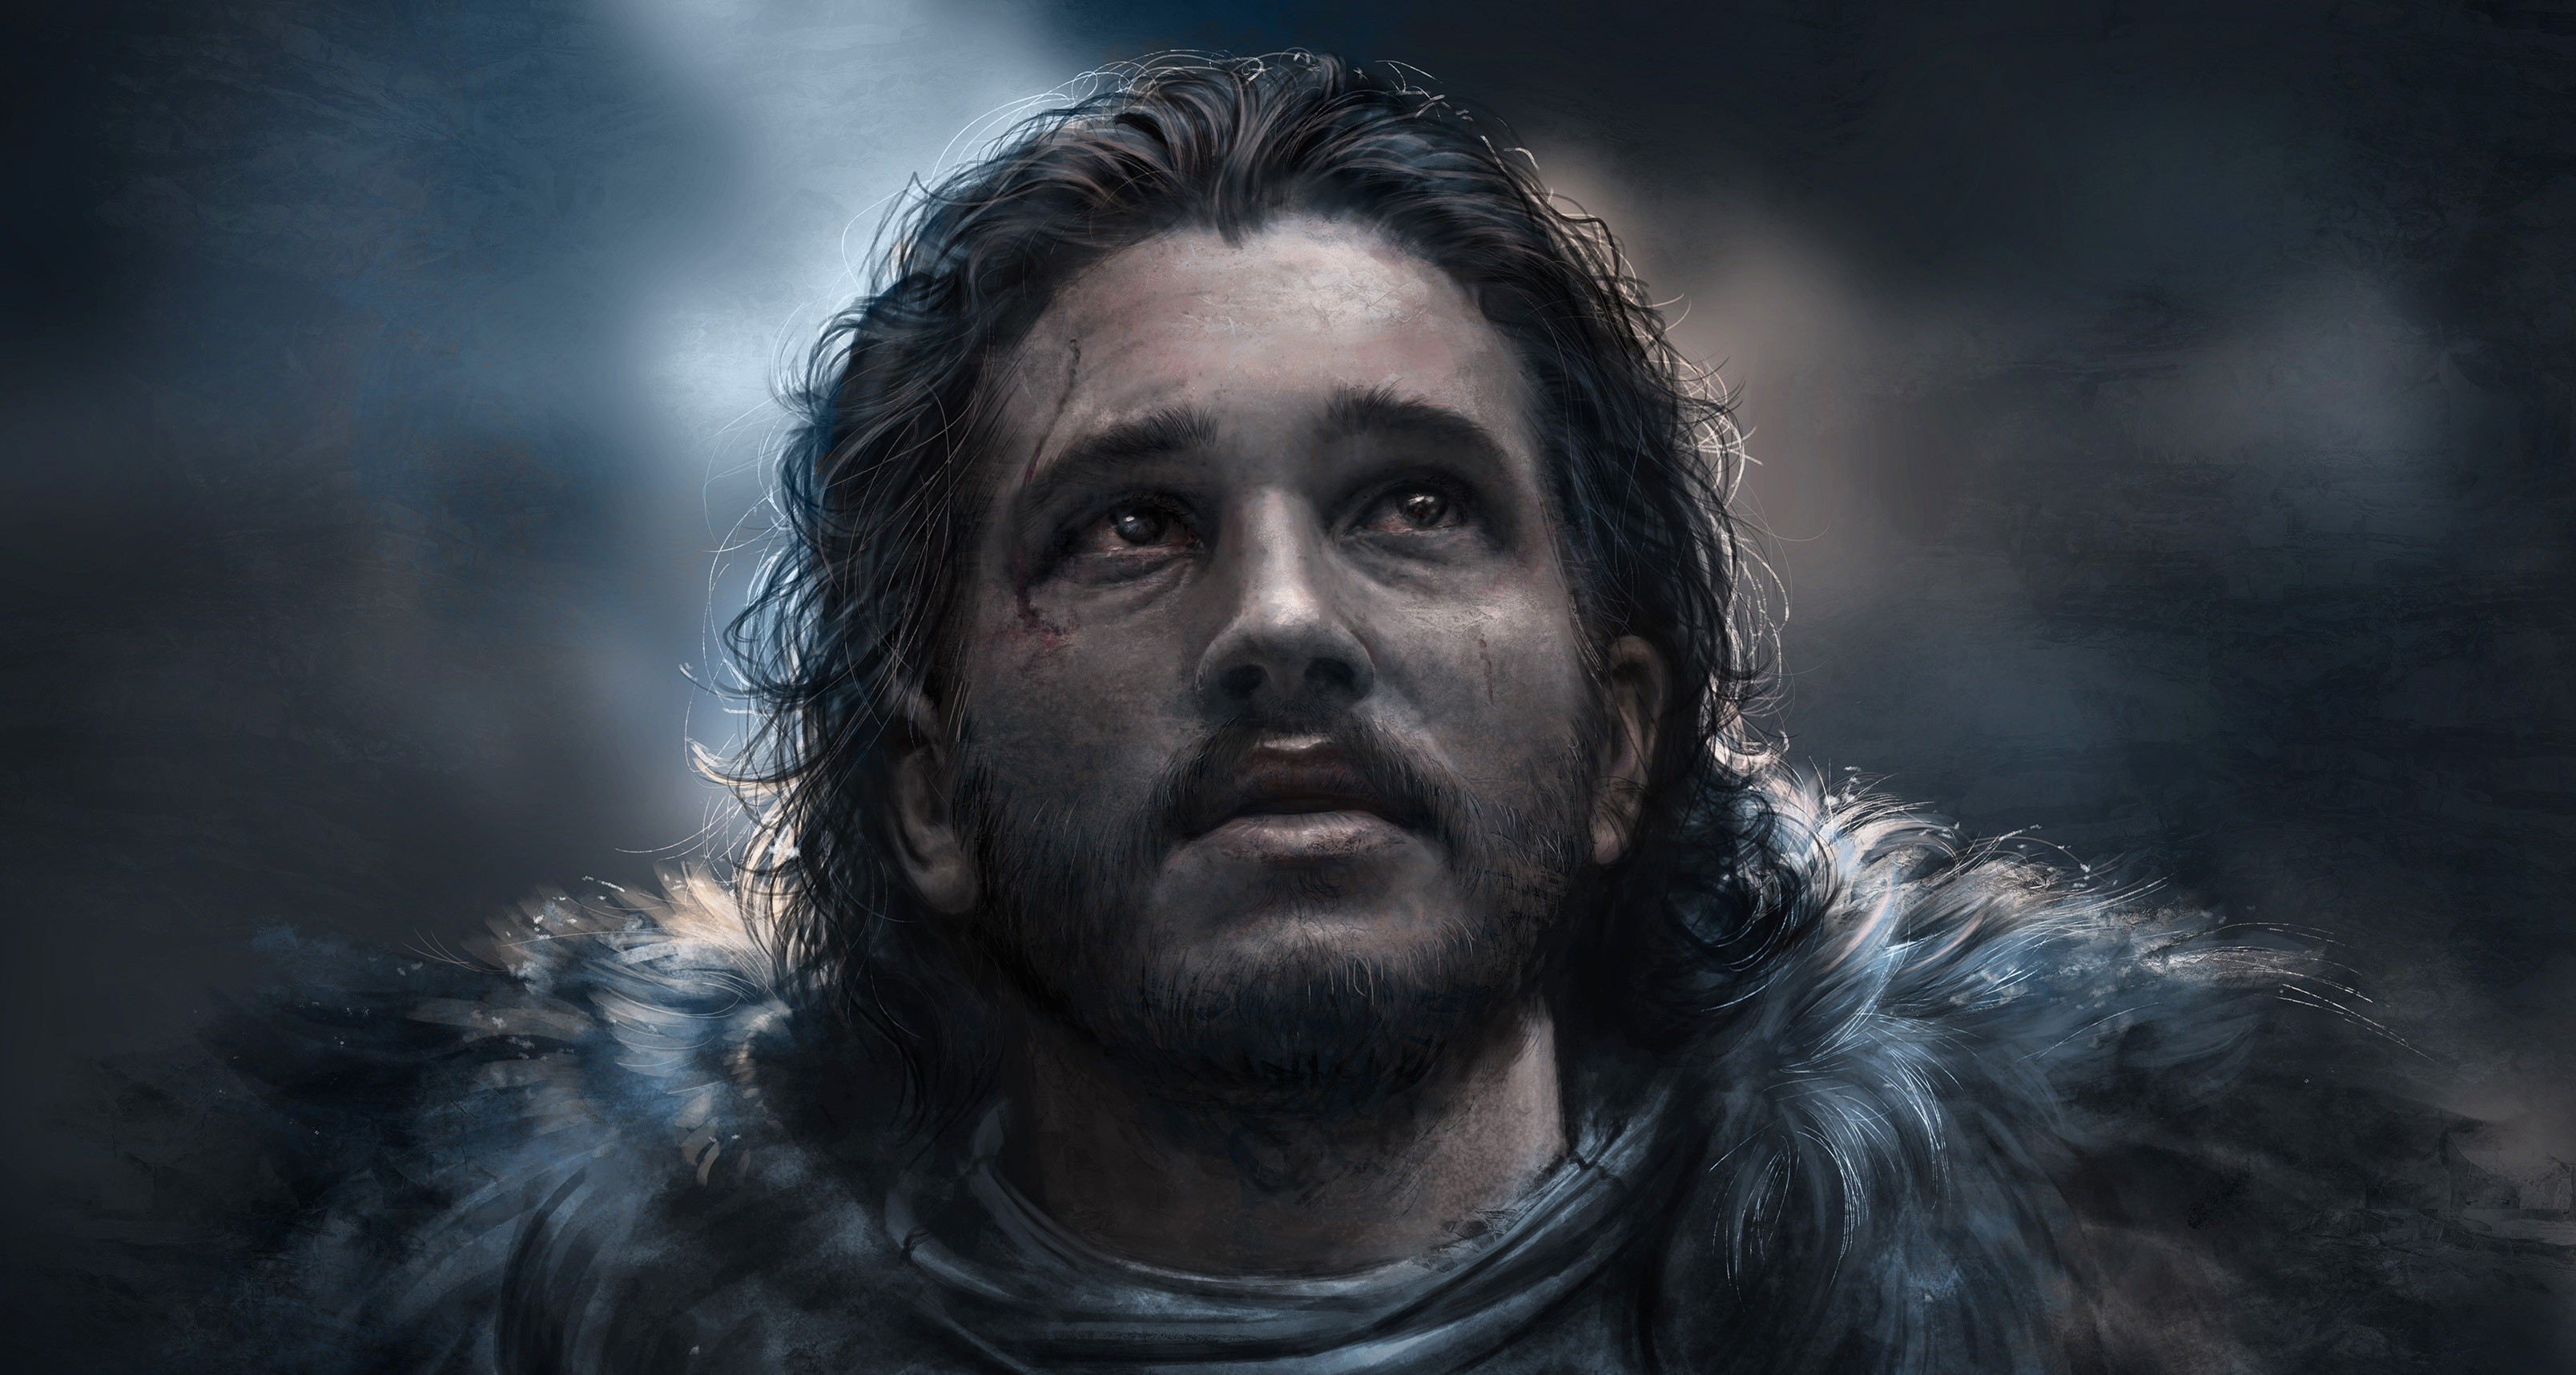 People 3216x1716 Game of Thrones Jon Snow fantasy men men TV series closeup